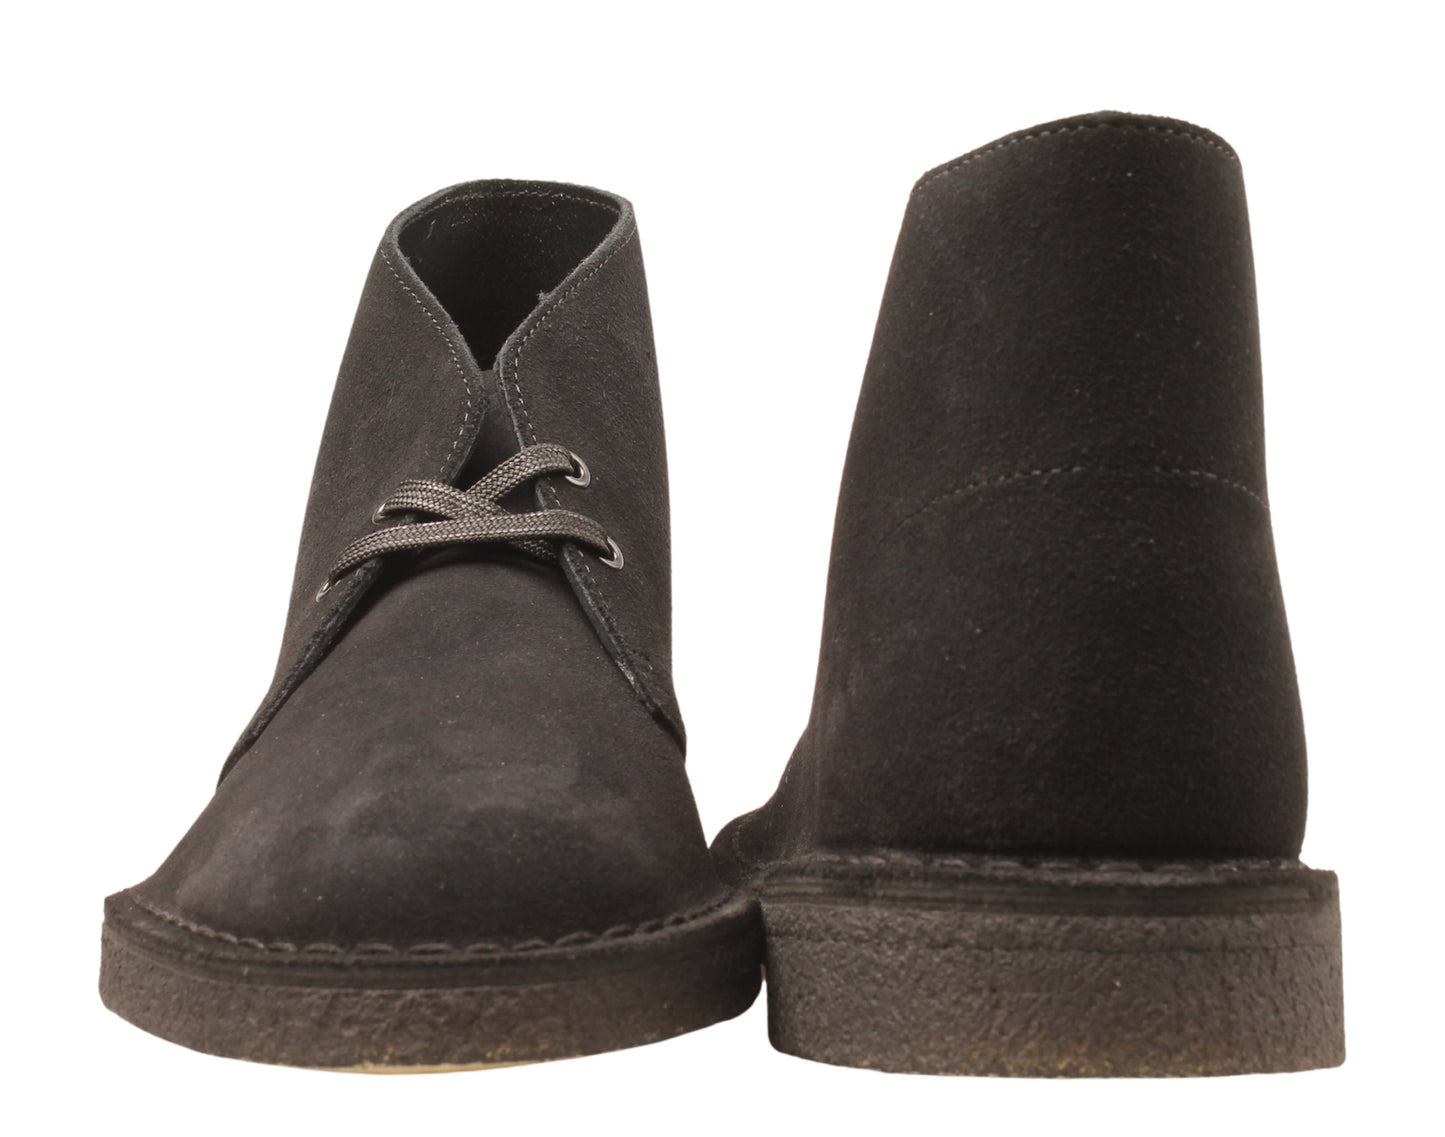 Clarks Originals Desert Boot Men's Casual Chukka Boots